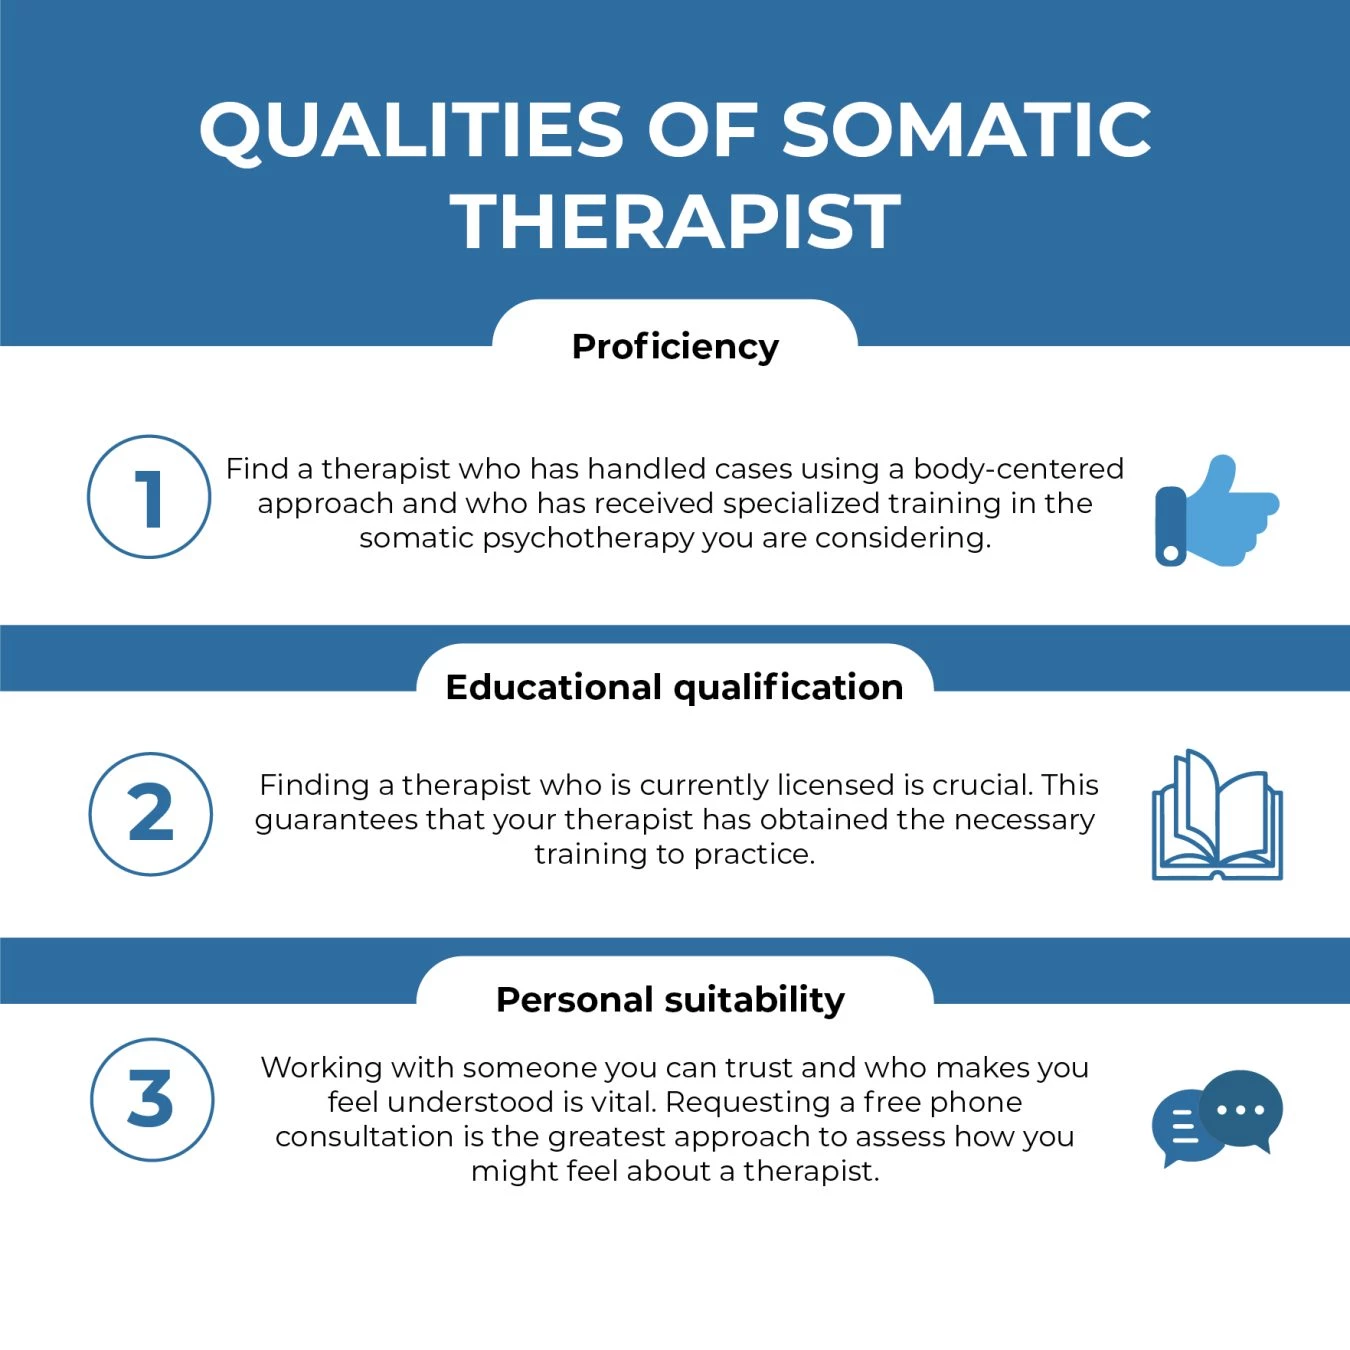 QUALITIES OF SOMATIC THERAPIST